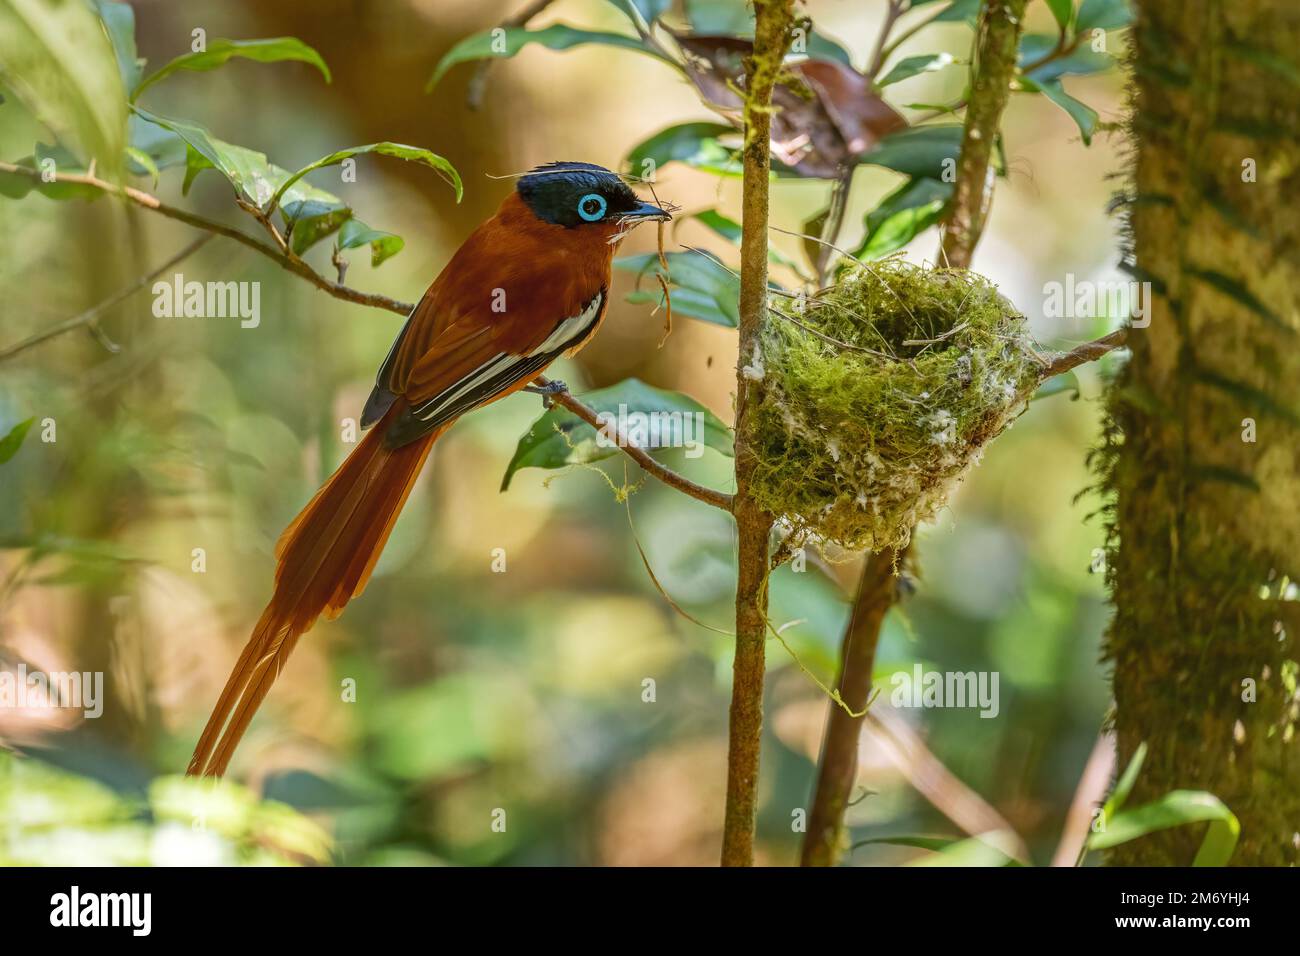 Madagaskar Paradise-Flycatcher - Terpsiphone mutata, Madagaskar. Wunderschöner Stehvogel mit extrem langem Schwanz, Madagaskar Wälder, Büsche. Stockfoto